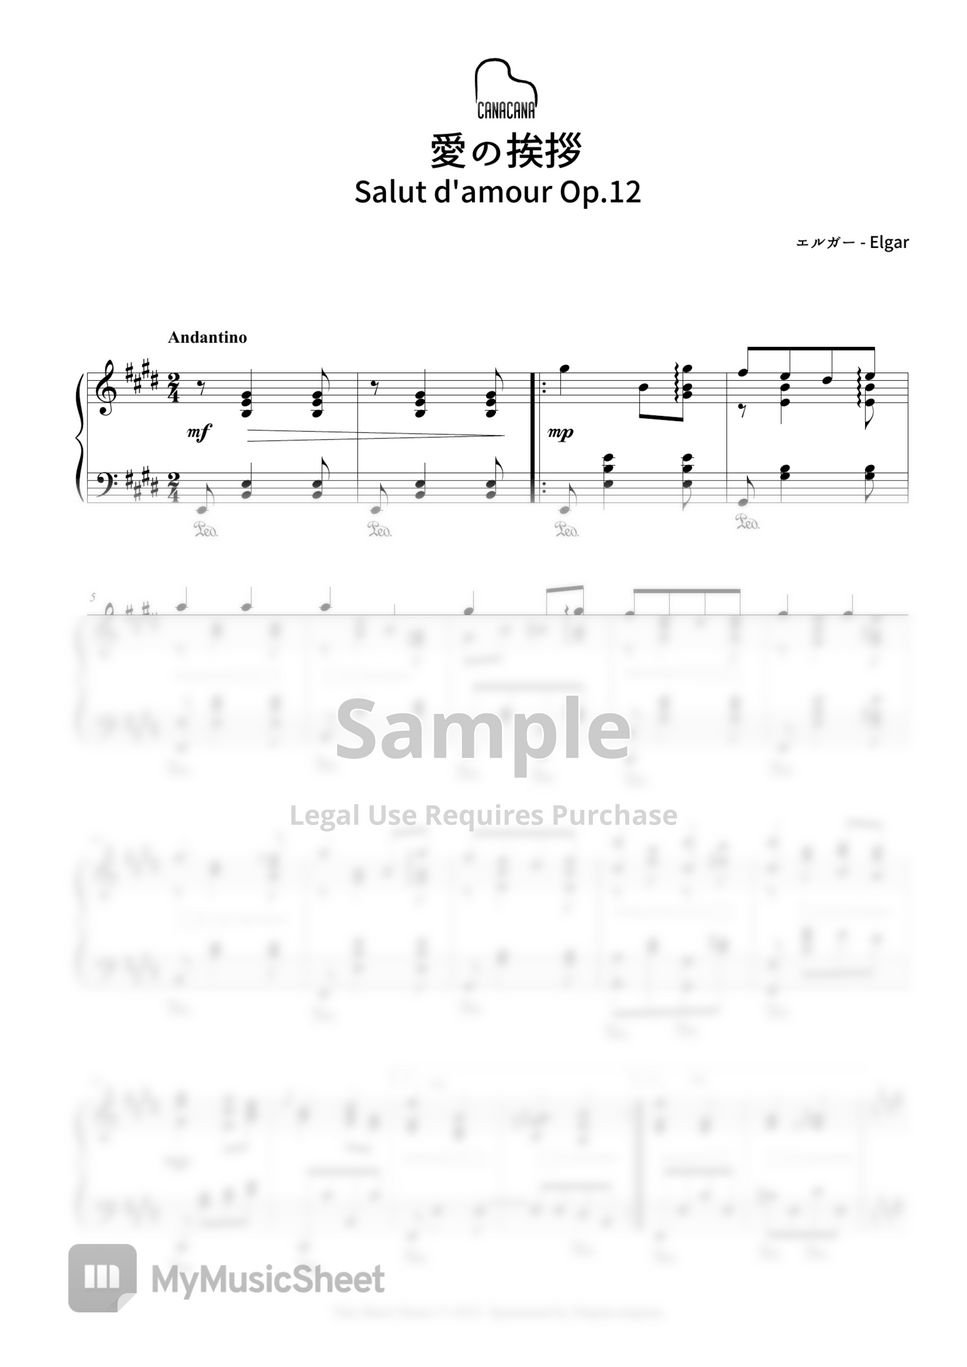 Elgar - Salut d'amour Op.12 by CANACANA family